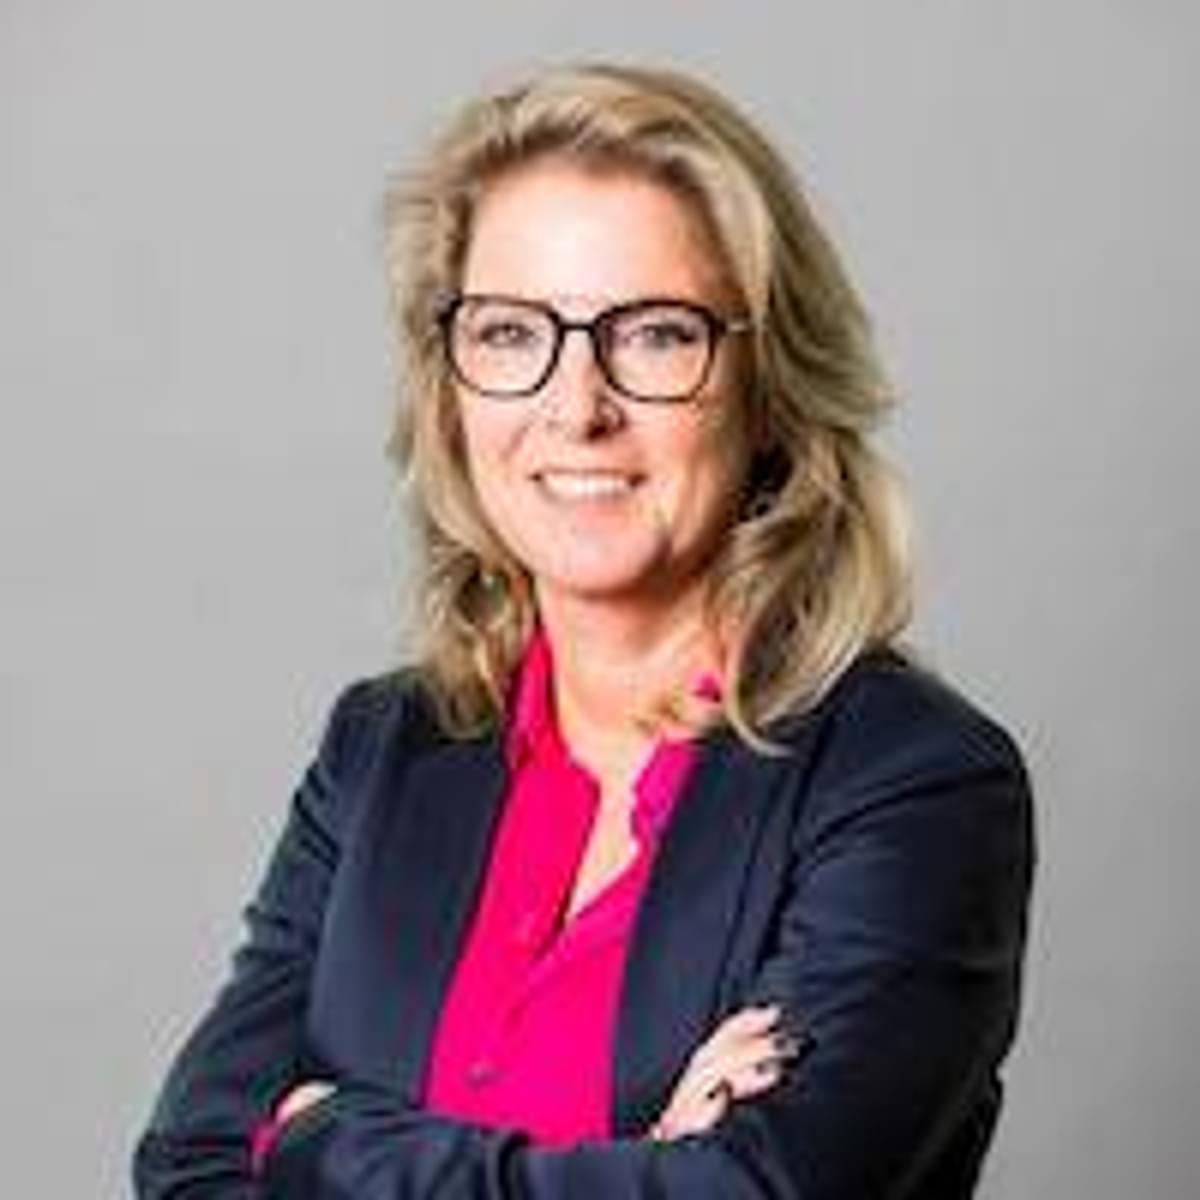 Valérie Bohnenn benoemd tot VP Human Resources bij T-Systems Nederland image